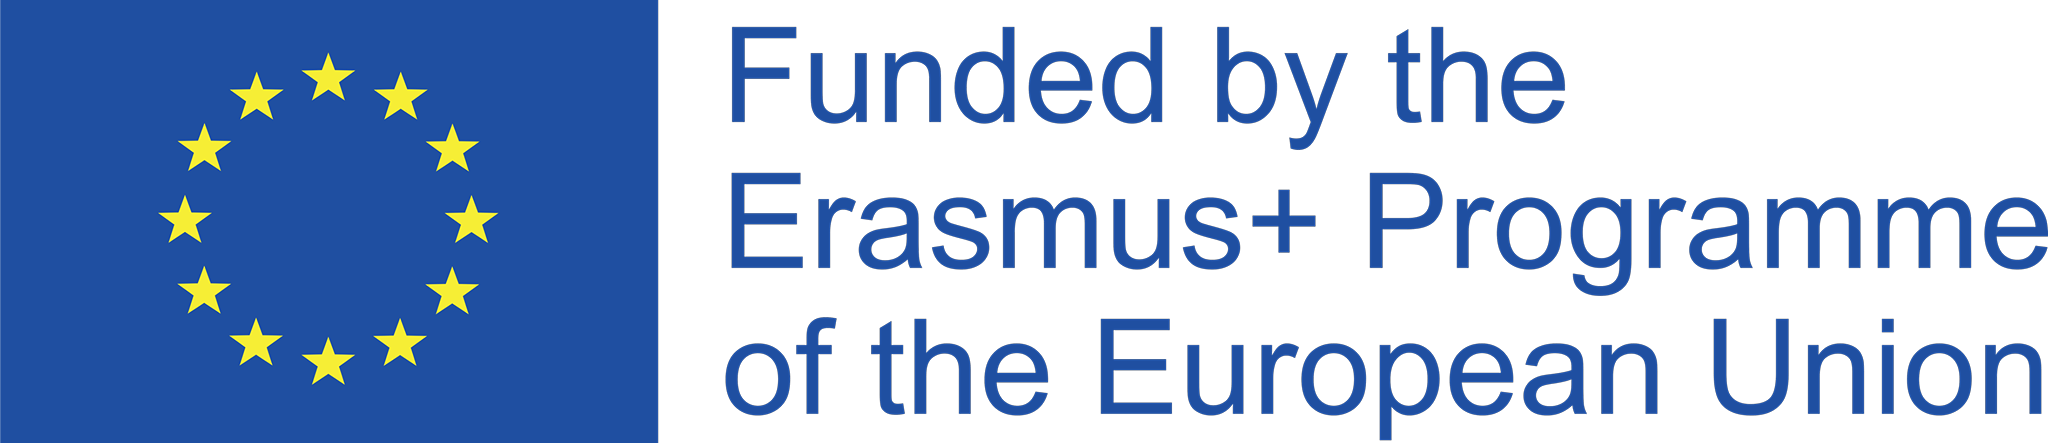 Programul Erasmus